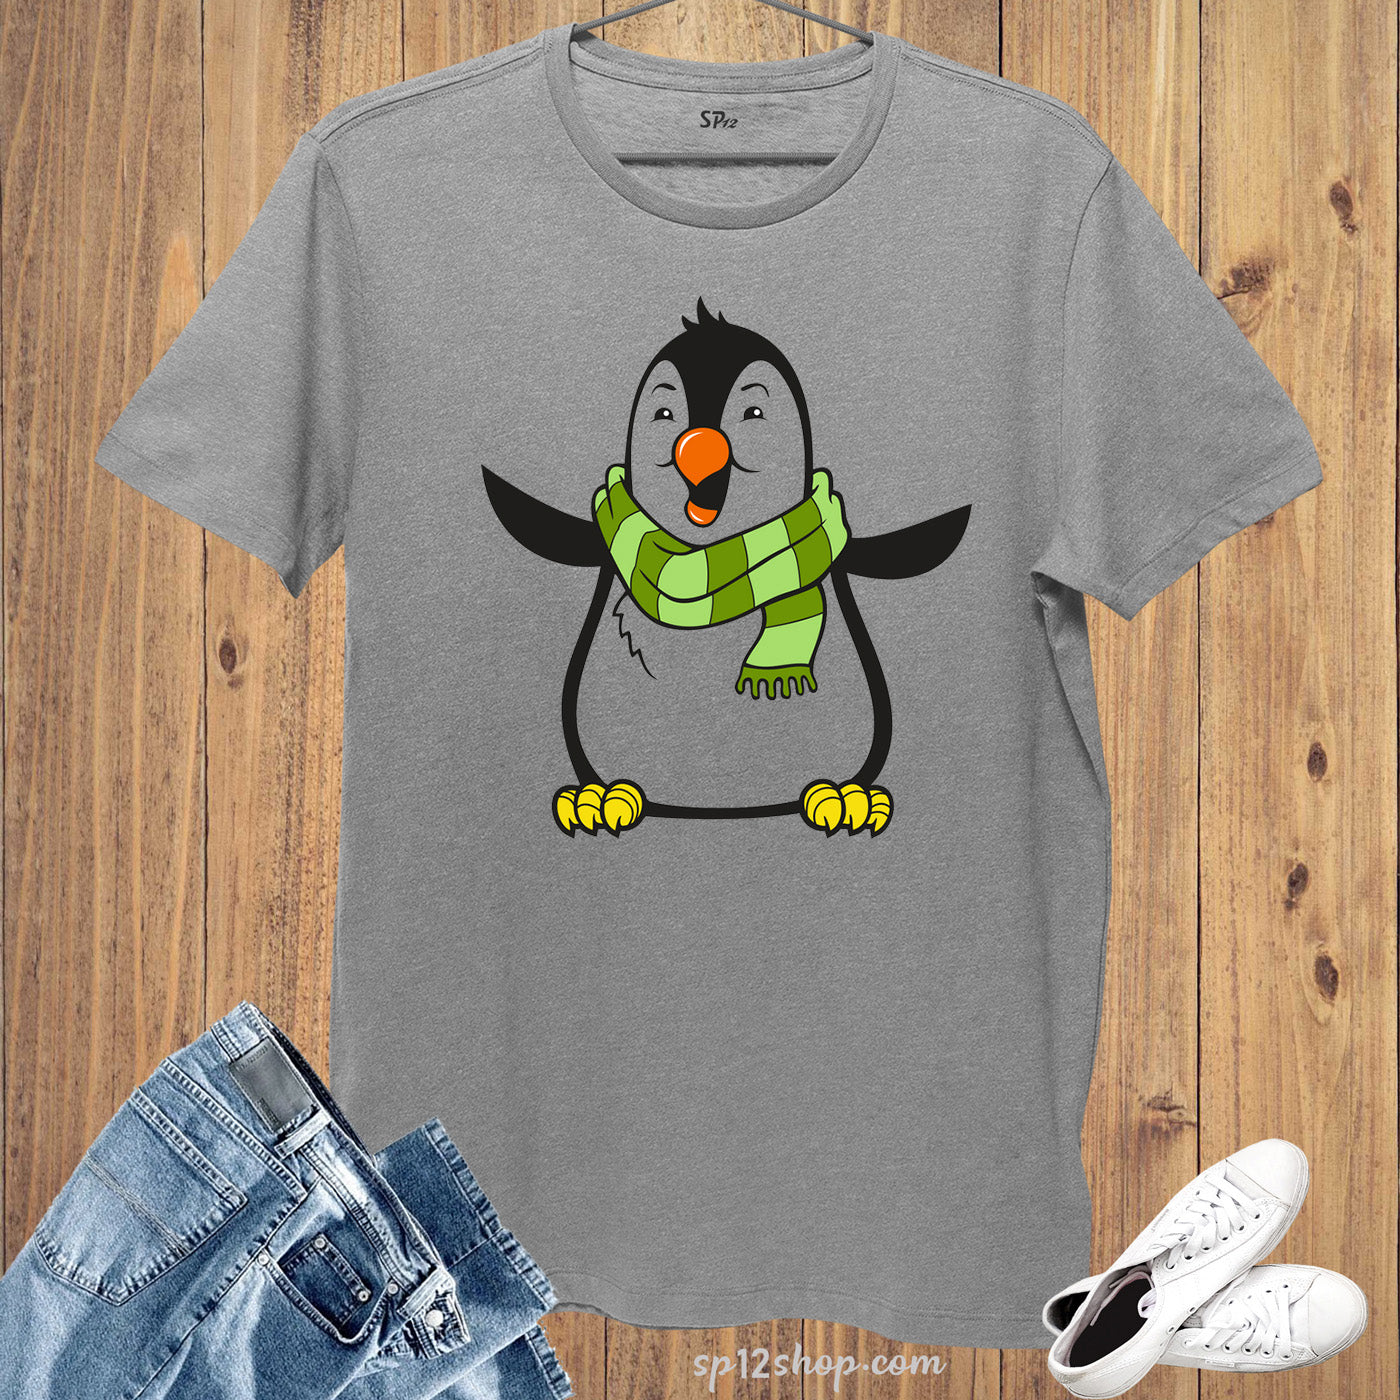 Cute Penguin Animal Graphic T Shirt